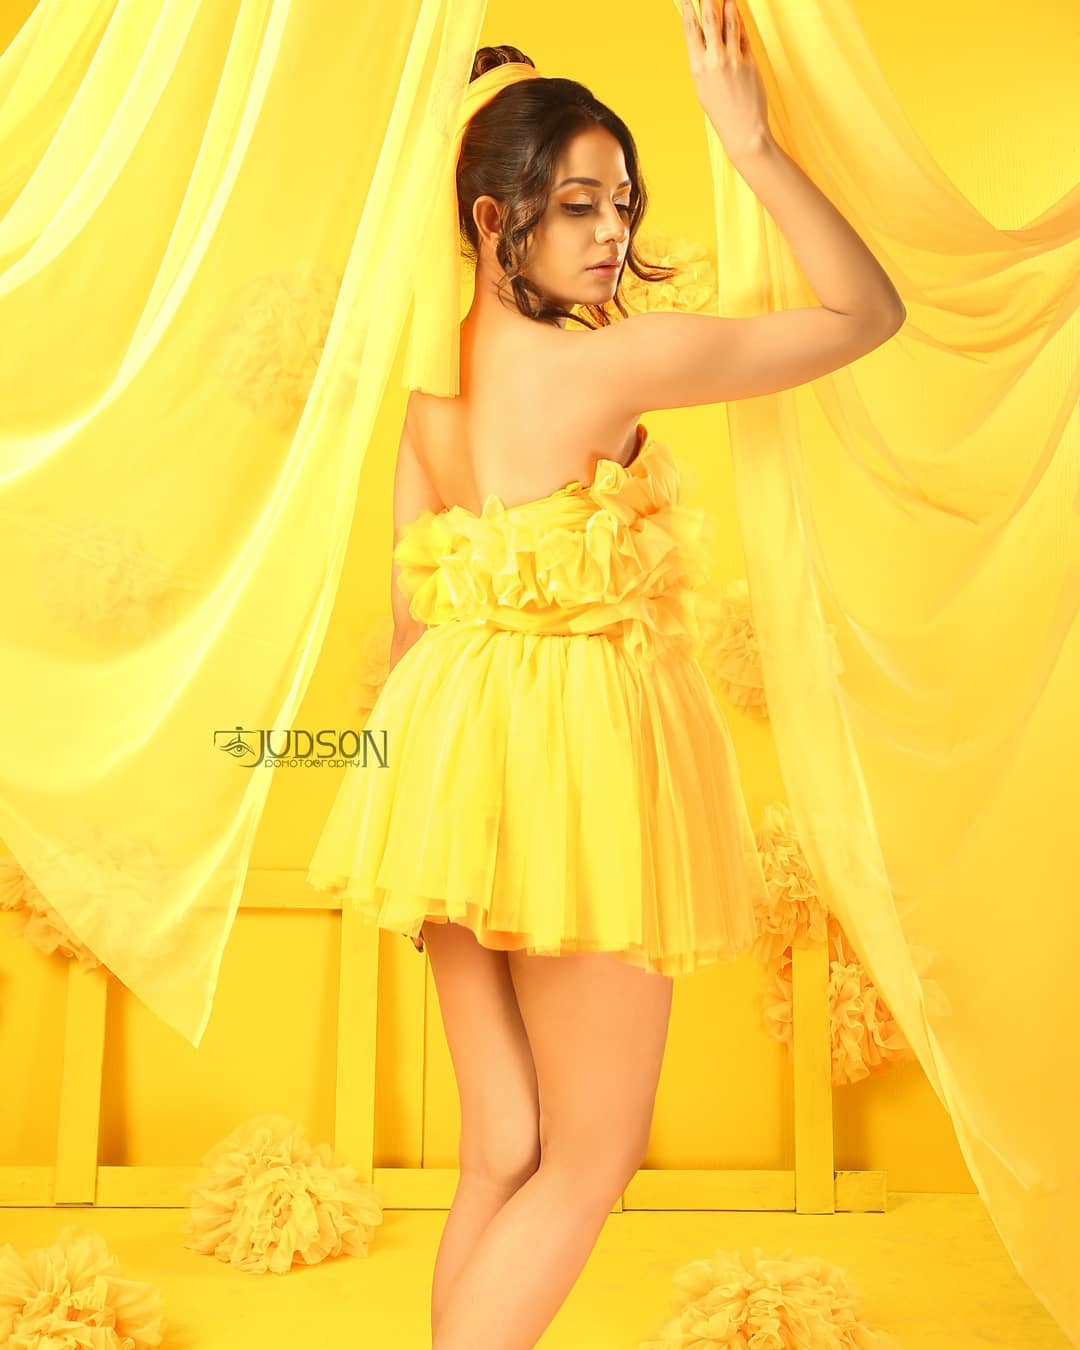 Aishwarya Dutta hot stills in yellow outfit